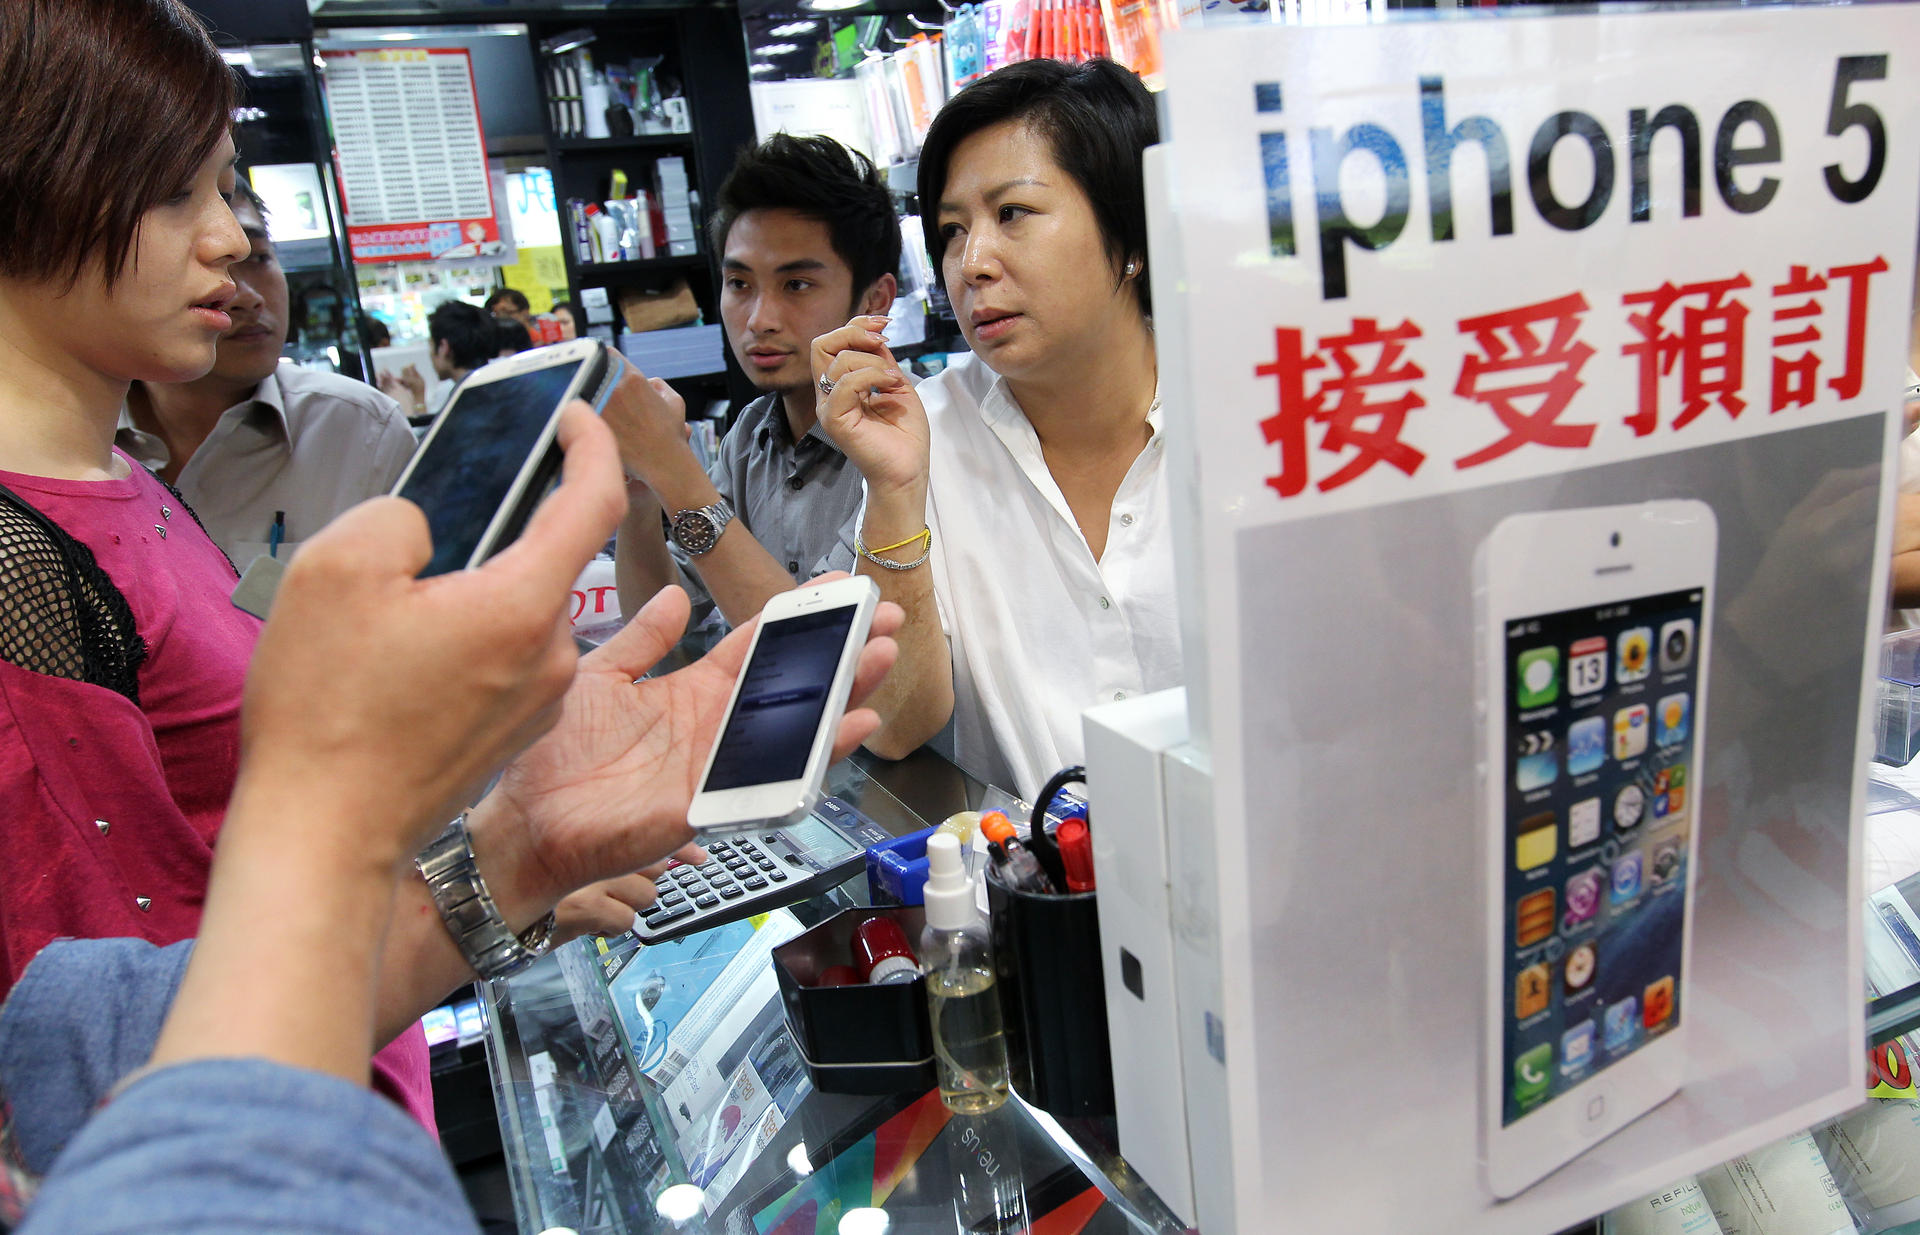 Fans ask about the phone at a Mong Kok trader. Photo: May Tse